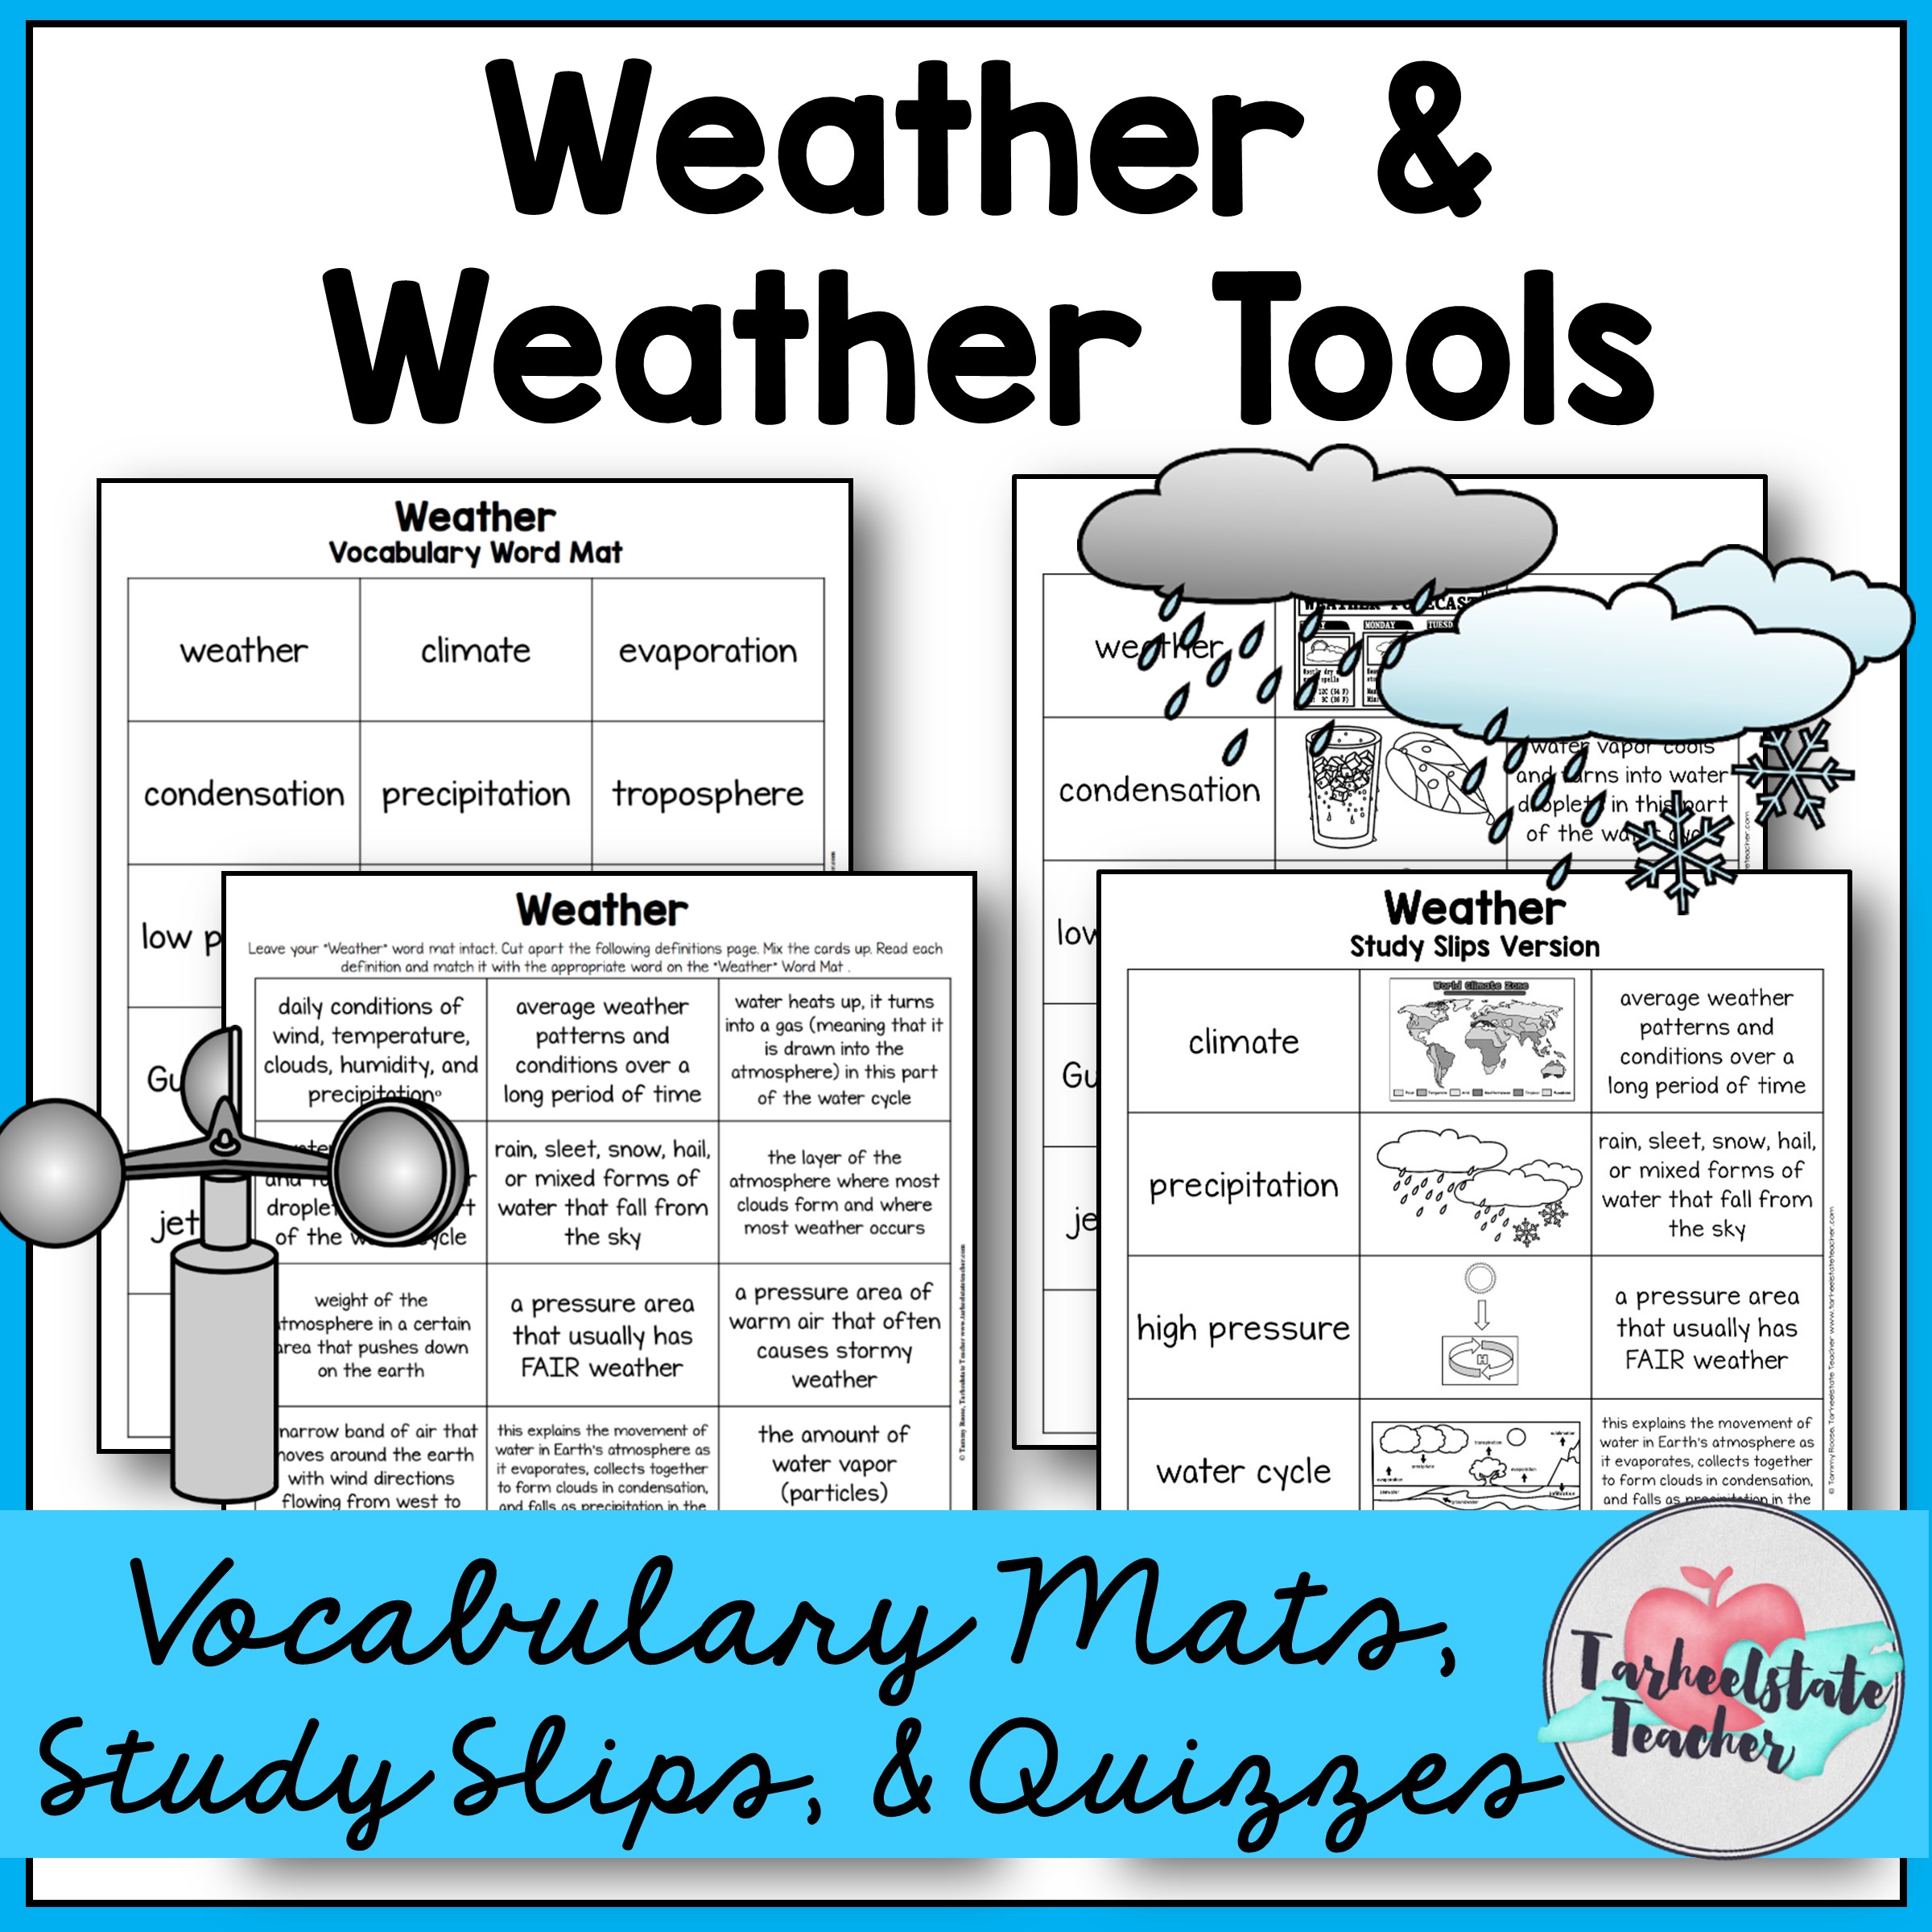 Weather Vocabulary Mat9.JPG